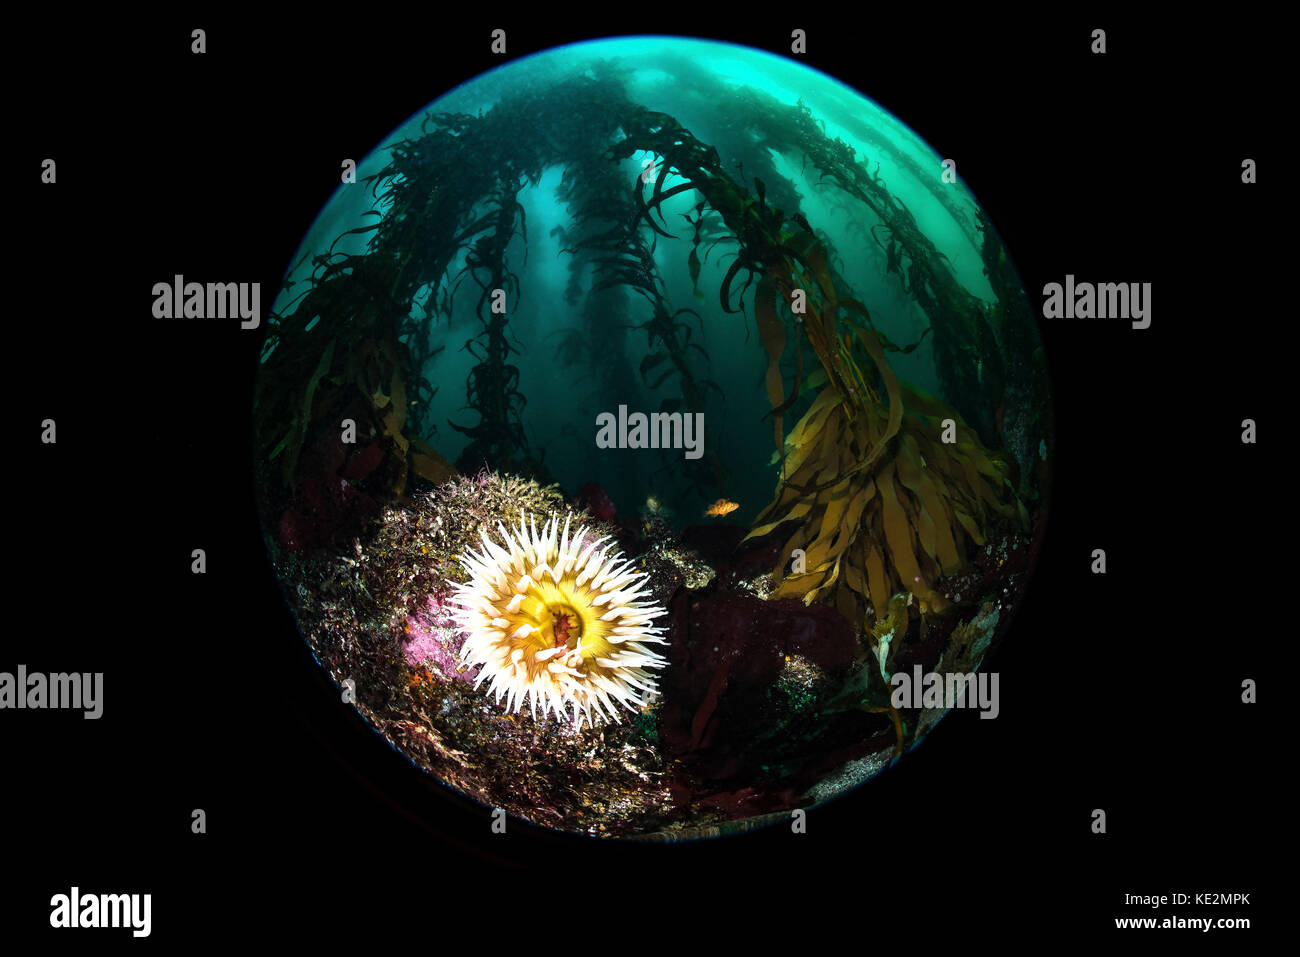 Anemone and kelp taken with a circular fisheye lens, Monterey, Central California. Stock Photo